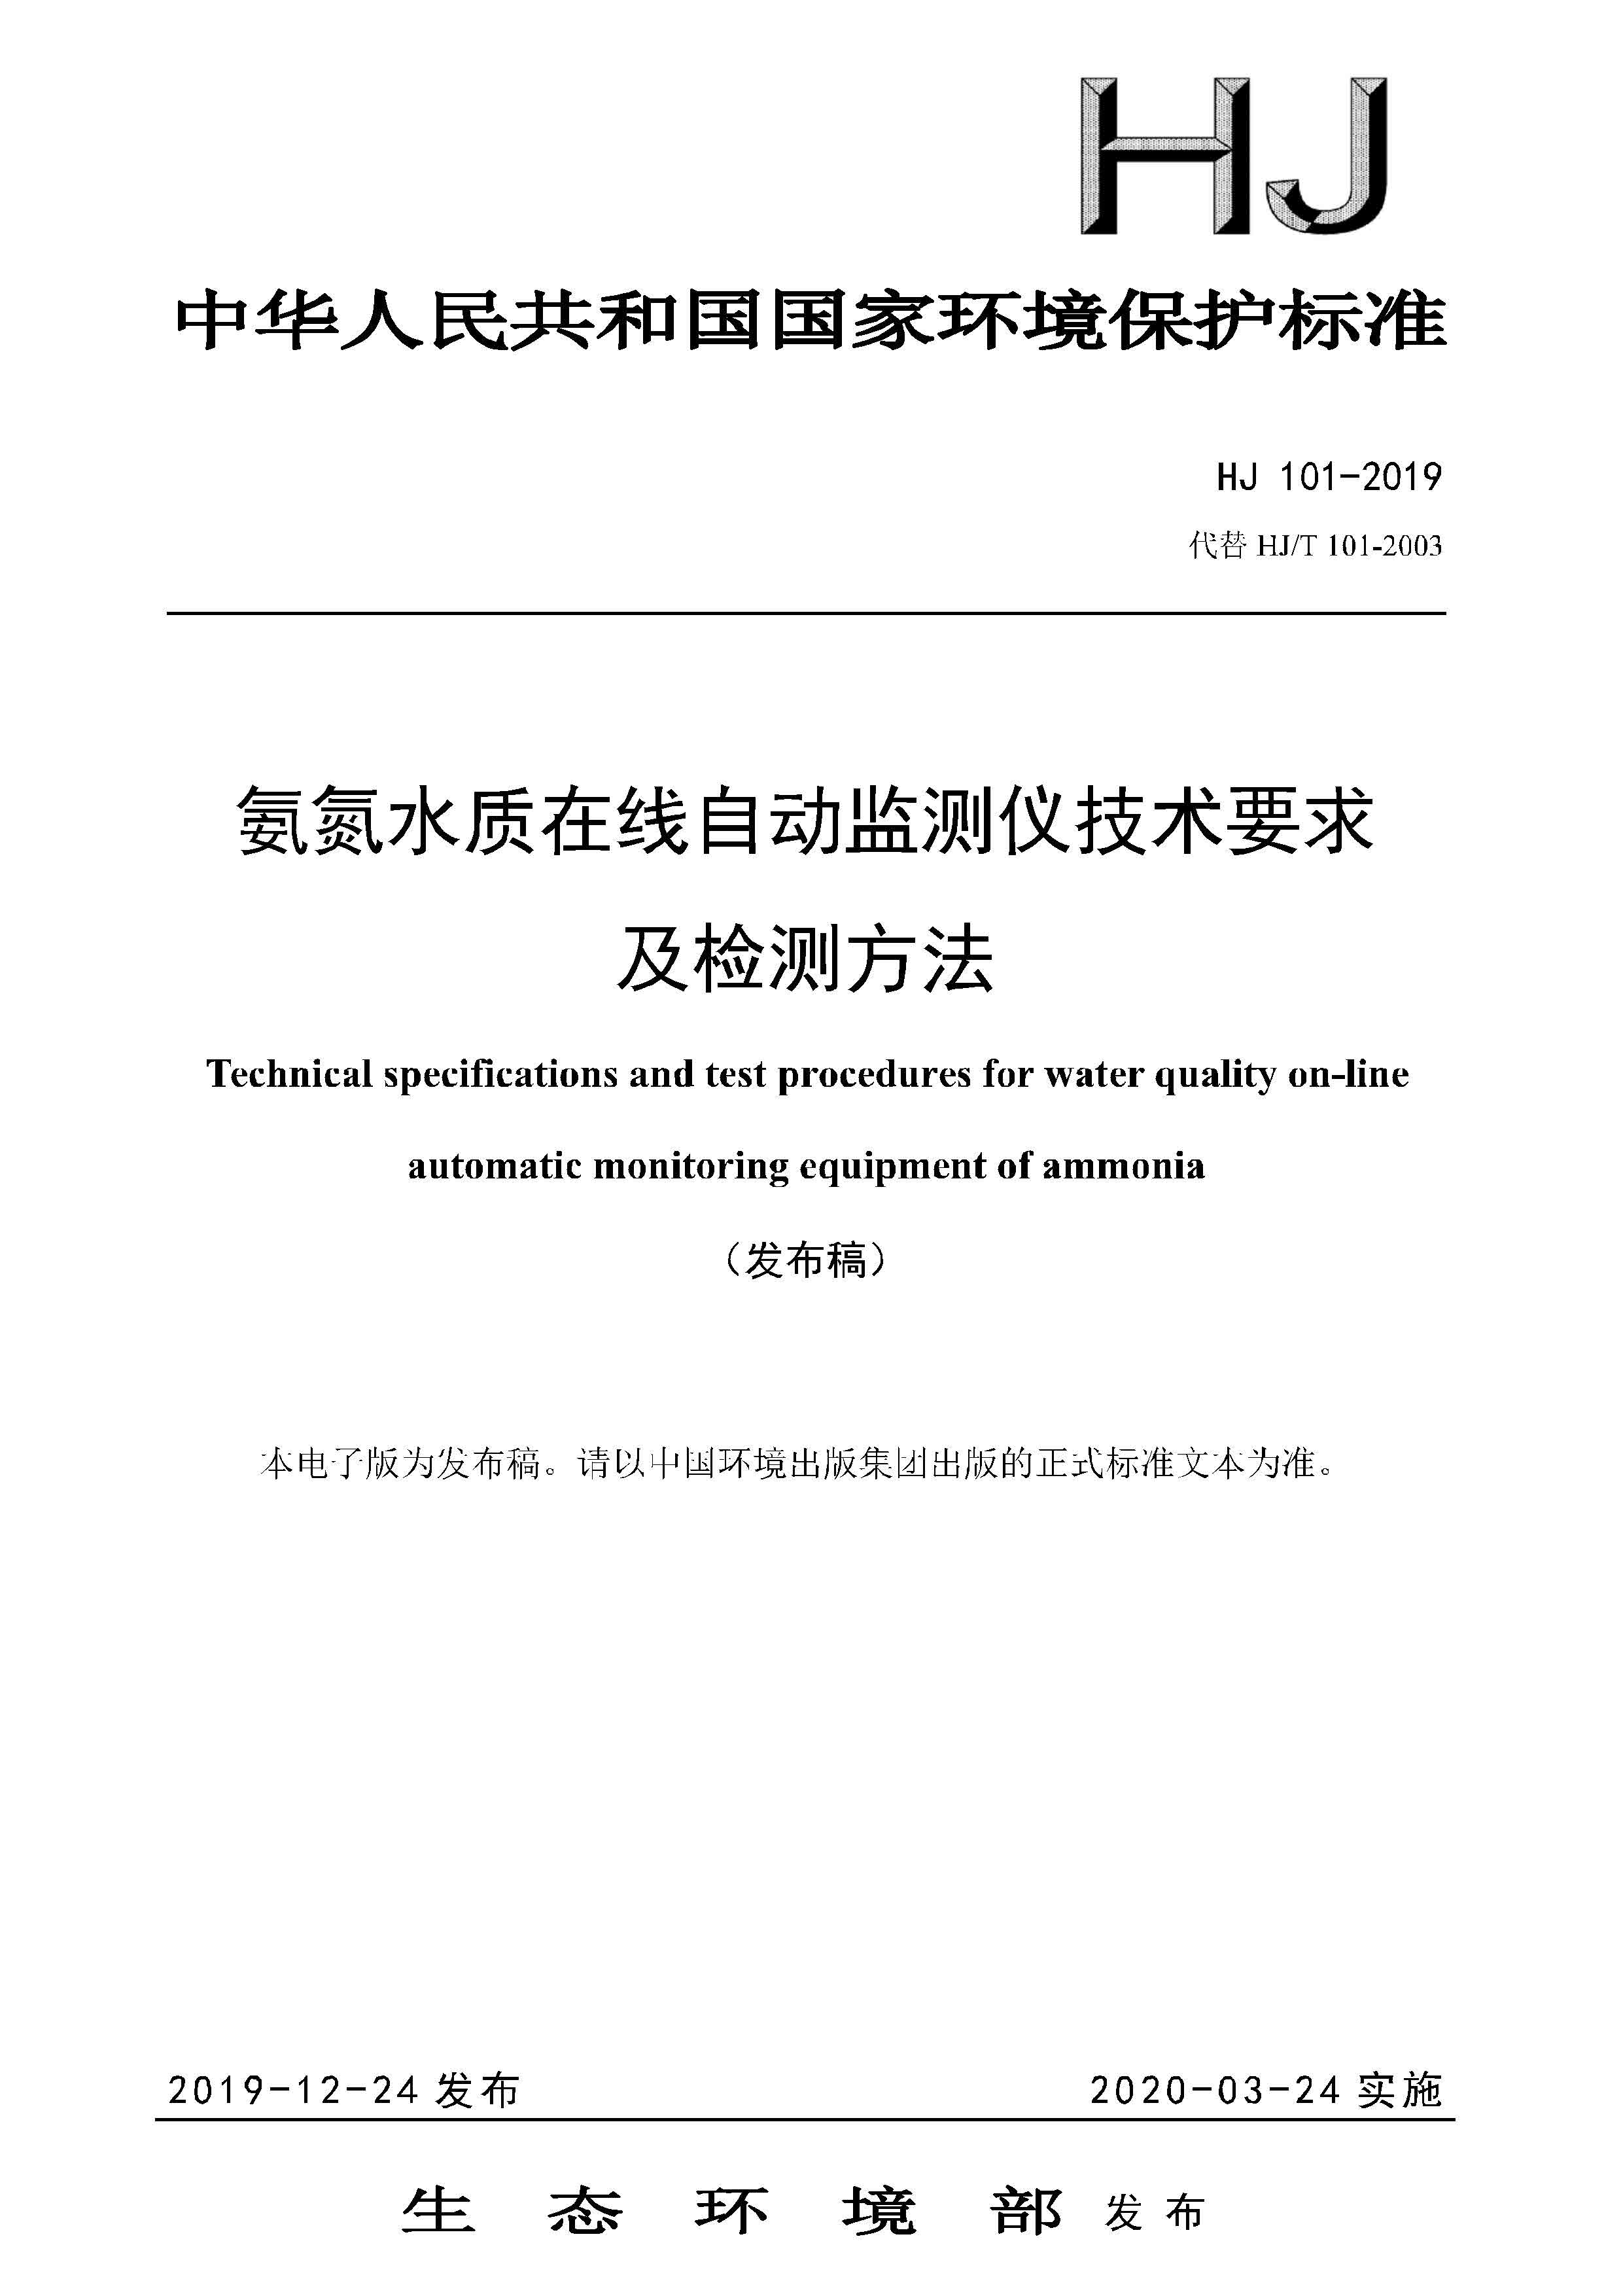 HJ 101-2019 氨氮水质在线自动监测仪技术要求及检测方法（19版 可下载）